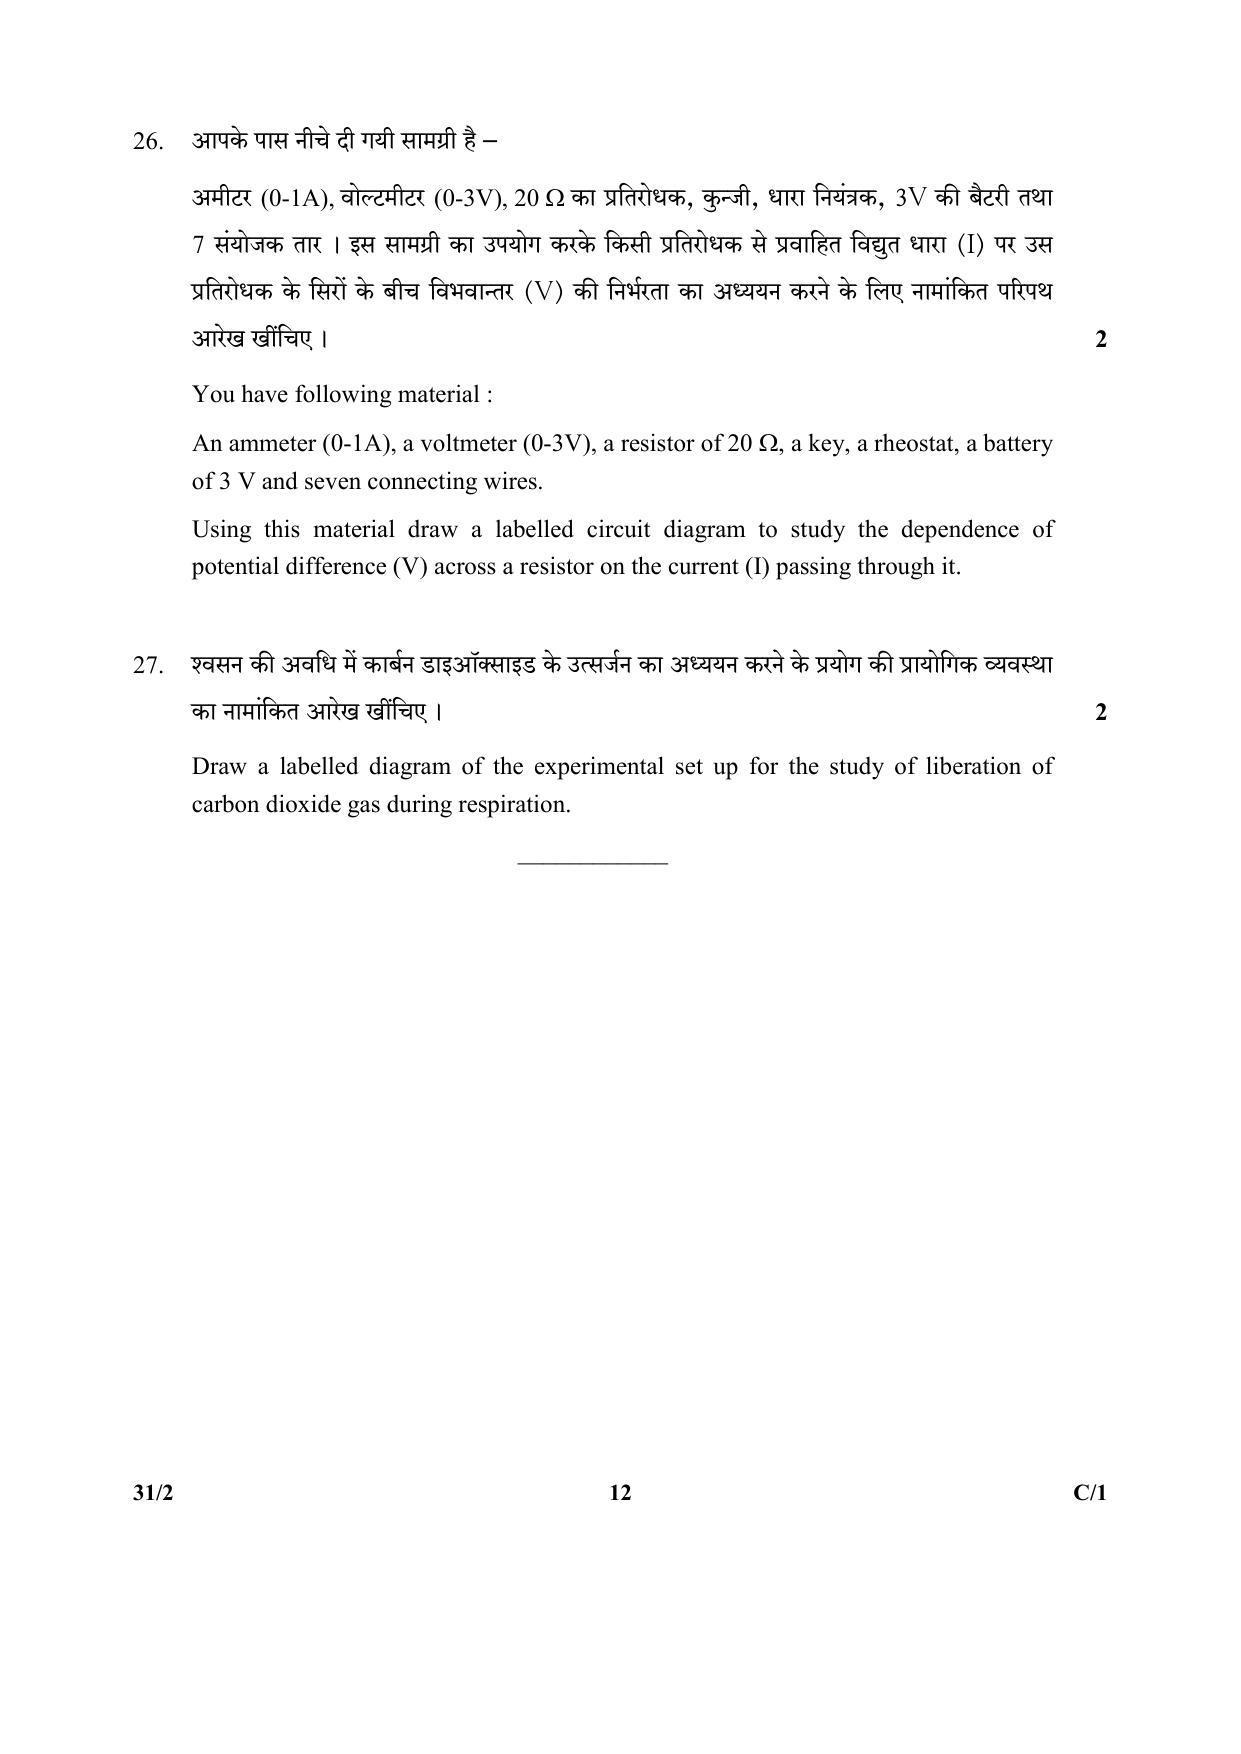 CBSE Class 10 41-2 Science PUNJABI VERSION 2018 Compartment Question Paper - Page 20